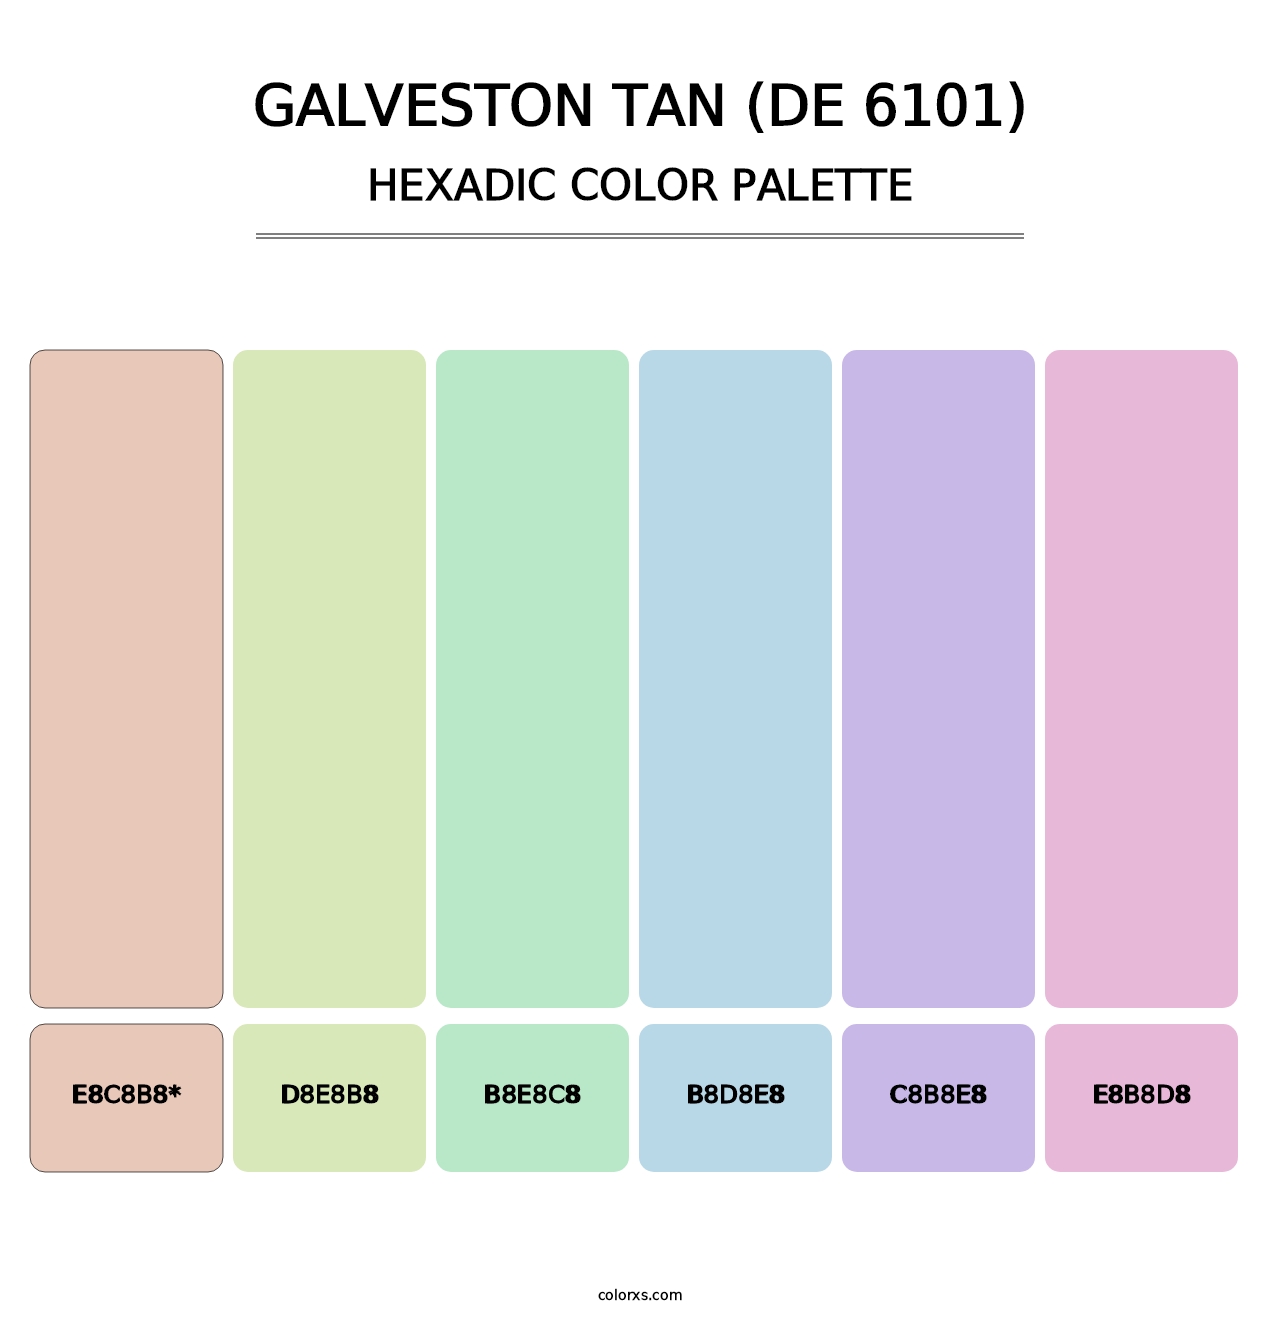 Galveston Tan (DE 6101) - Hexadic Color Palette